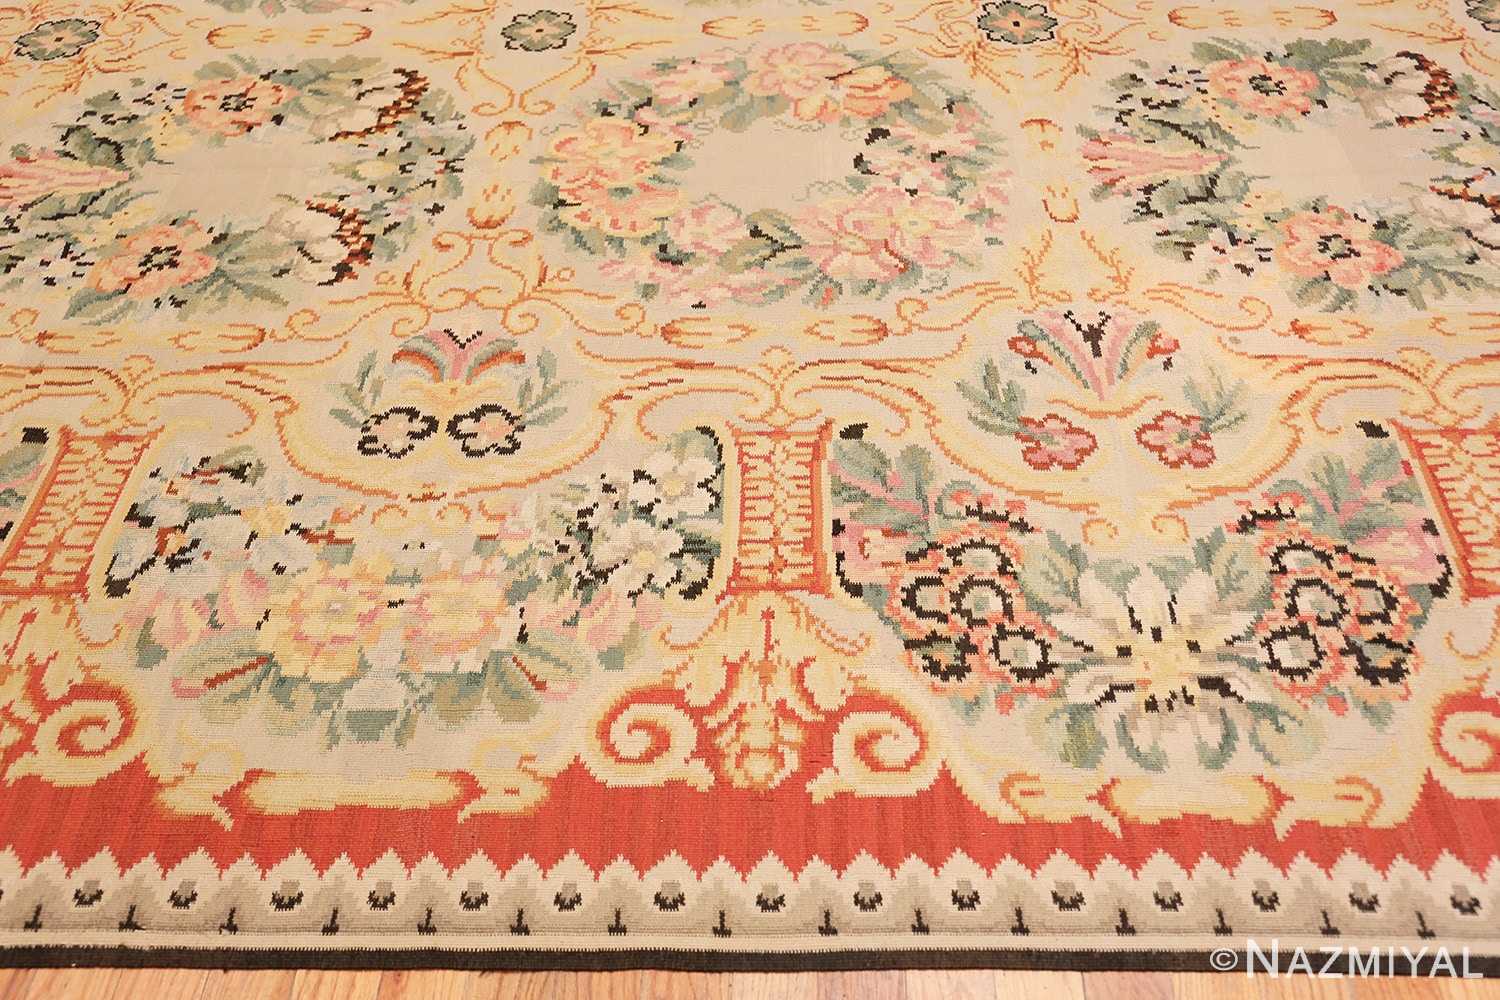 Border Antique Floral Romanian Bessarabian Kilim rug 70101 by Nazmiyal